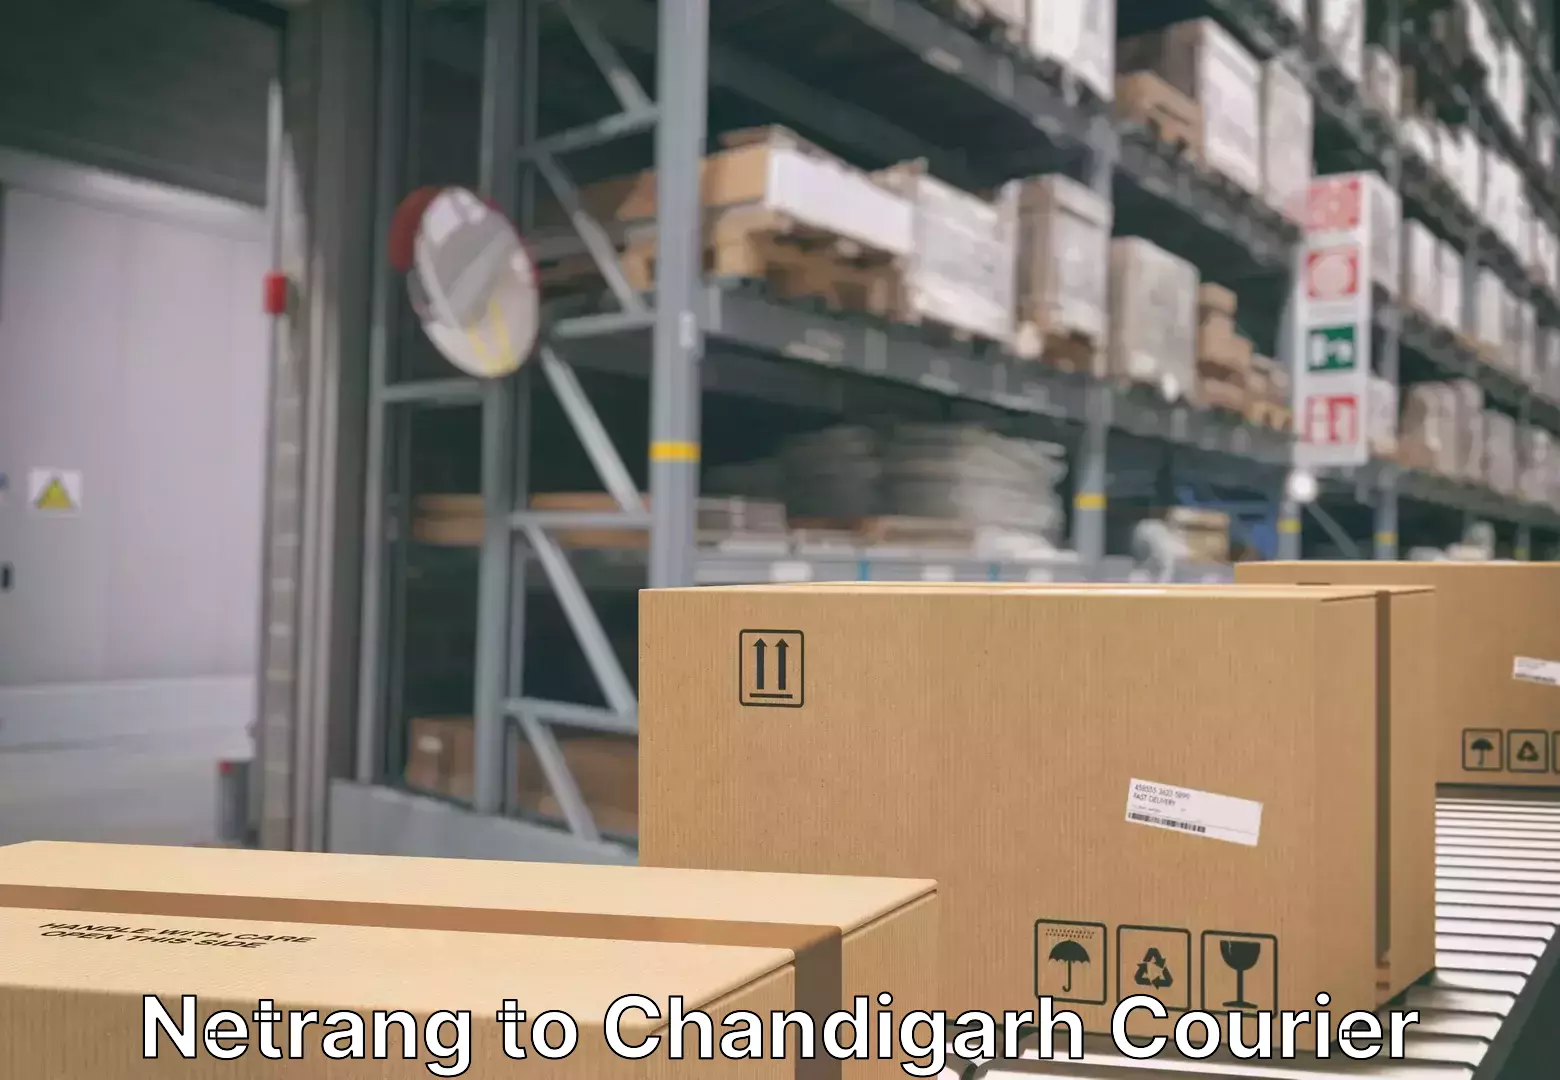 Professional moving company Netrang to Chandigarh